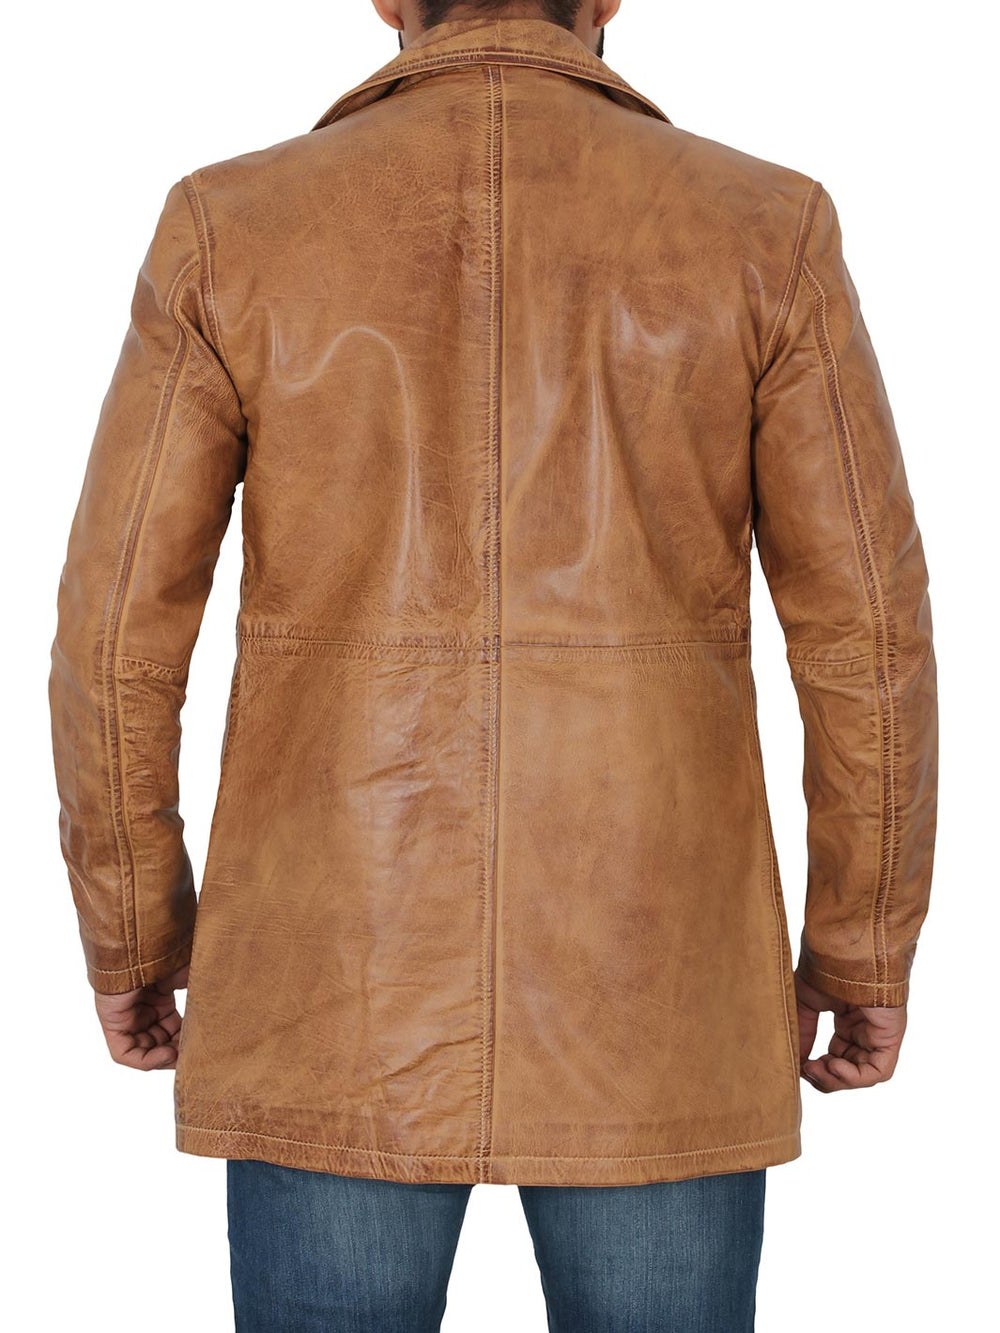 Mens Leather Coats, Stylish & Durable